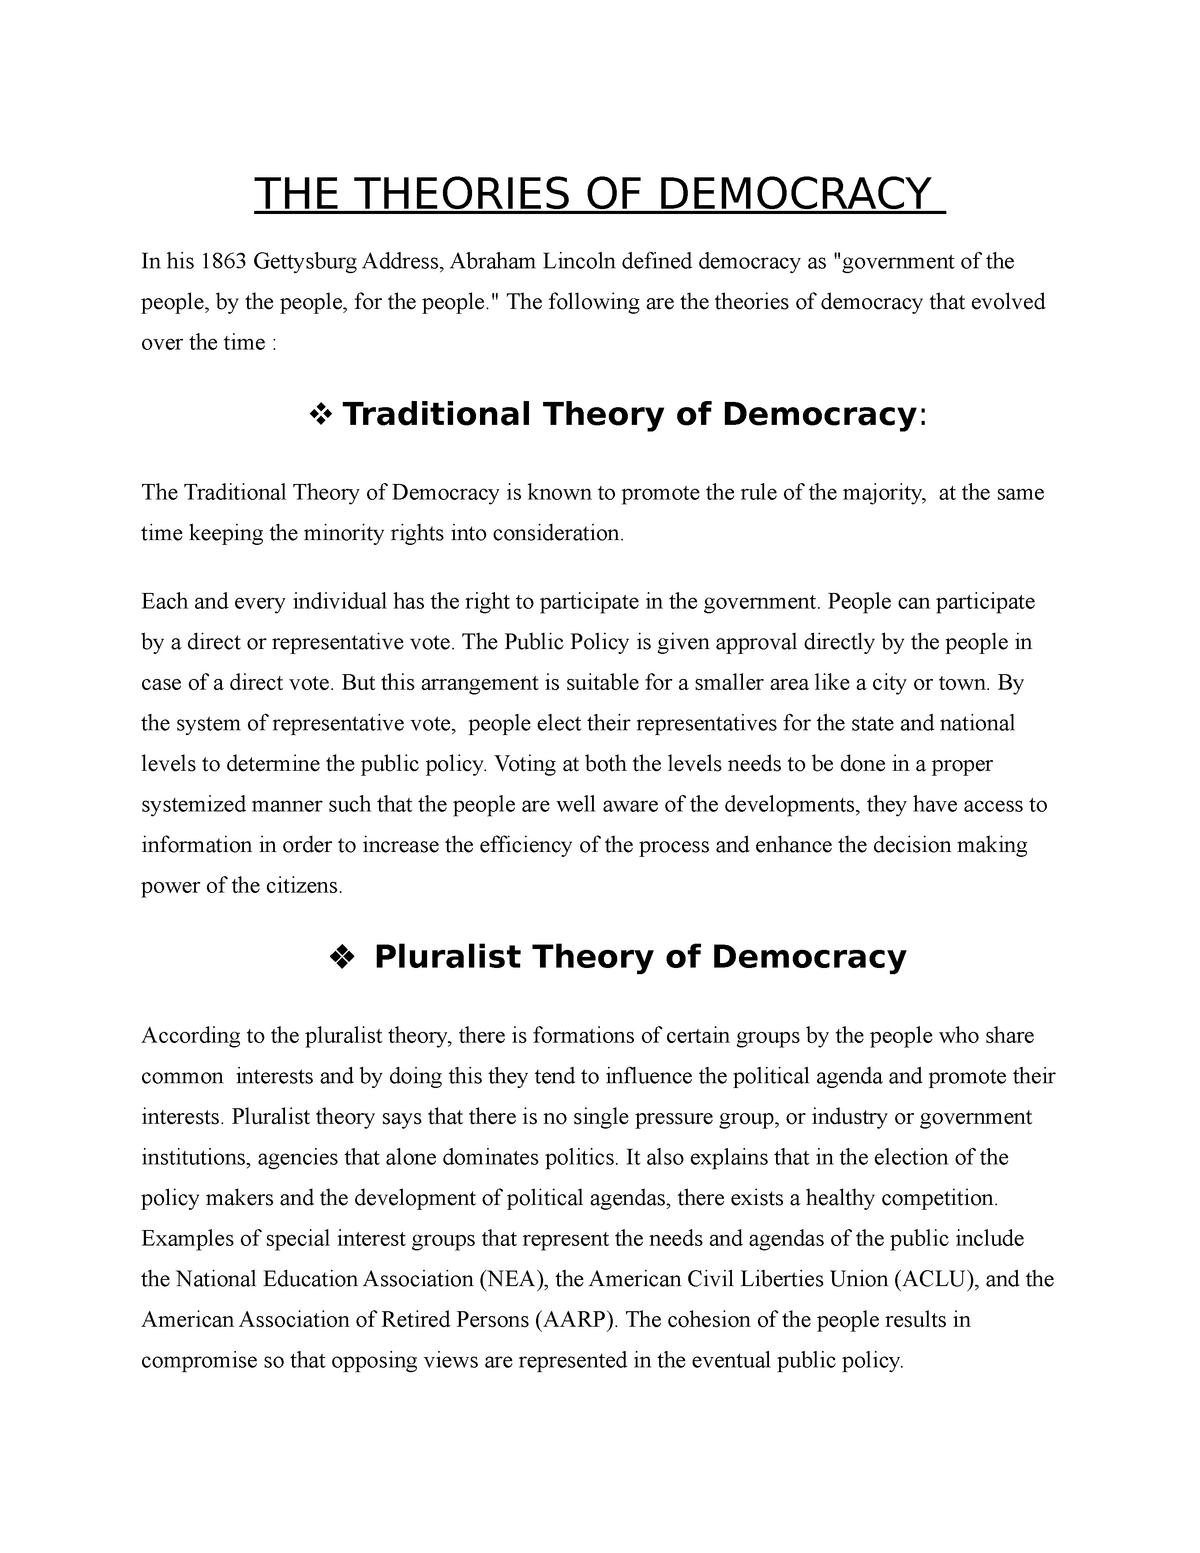 hyperpluralist theory of democracy